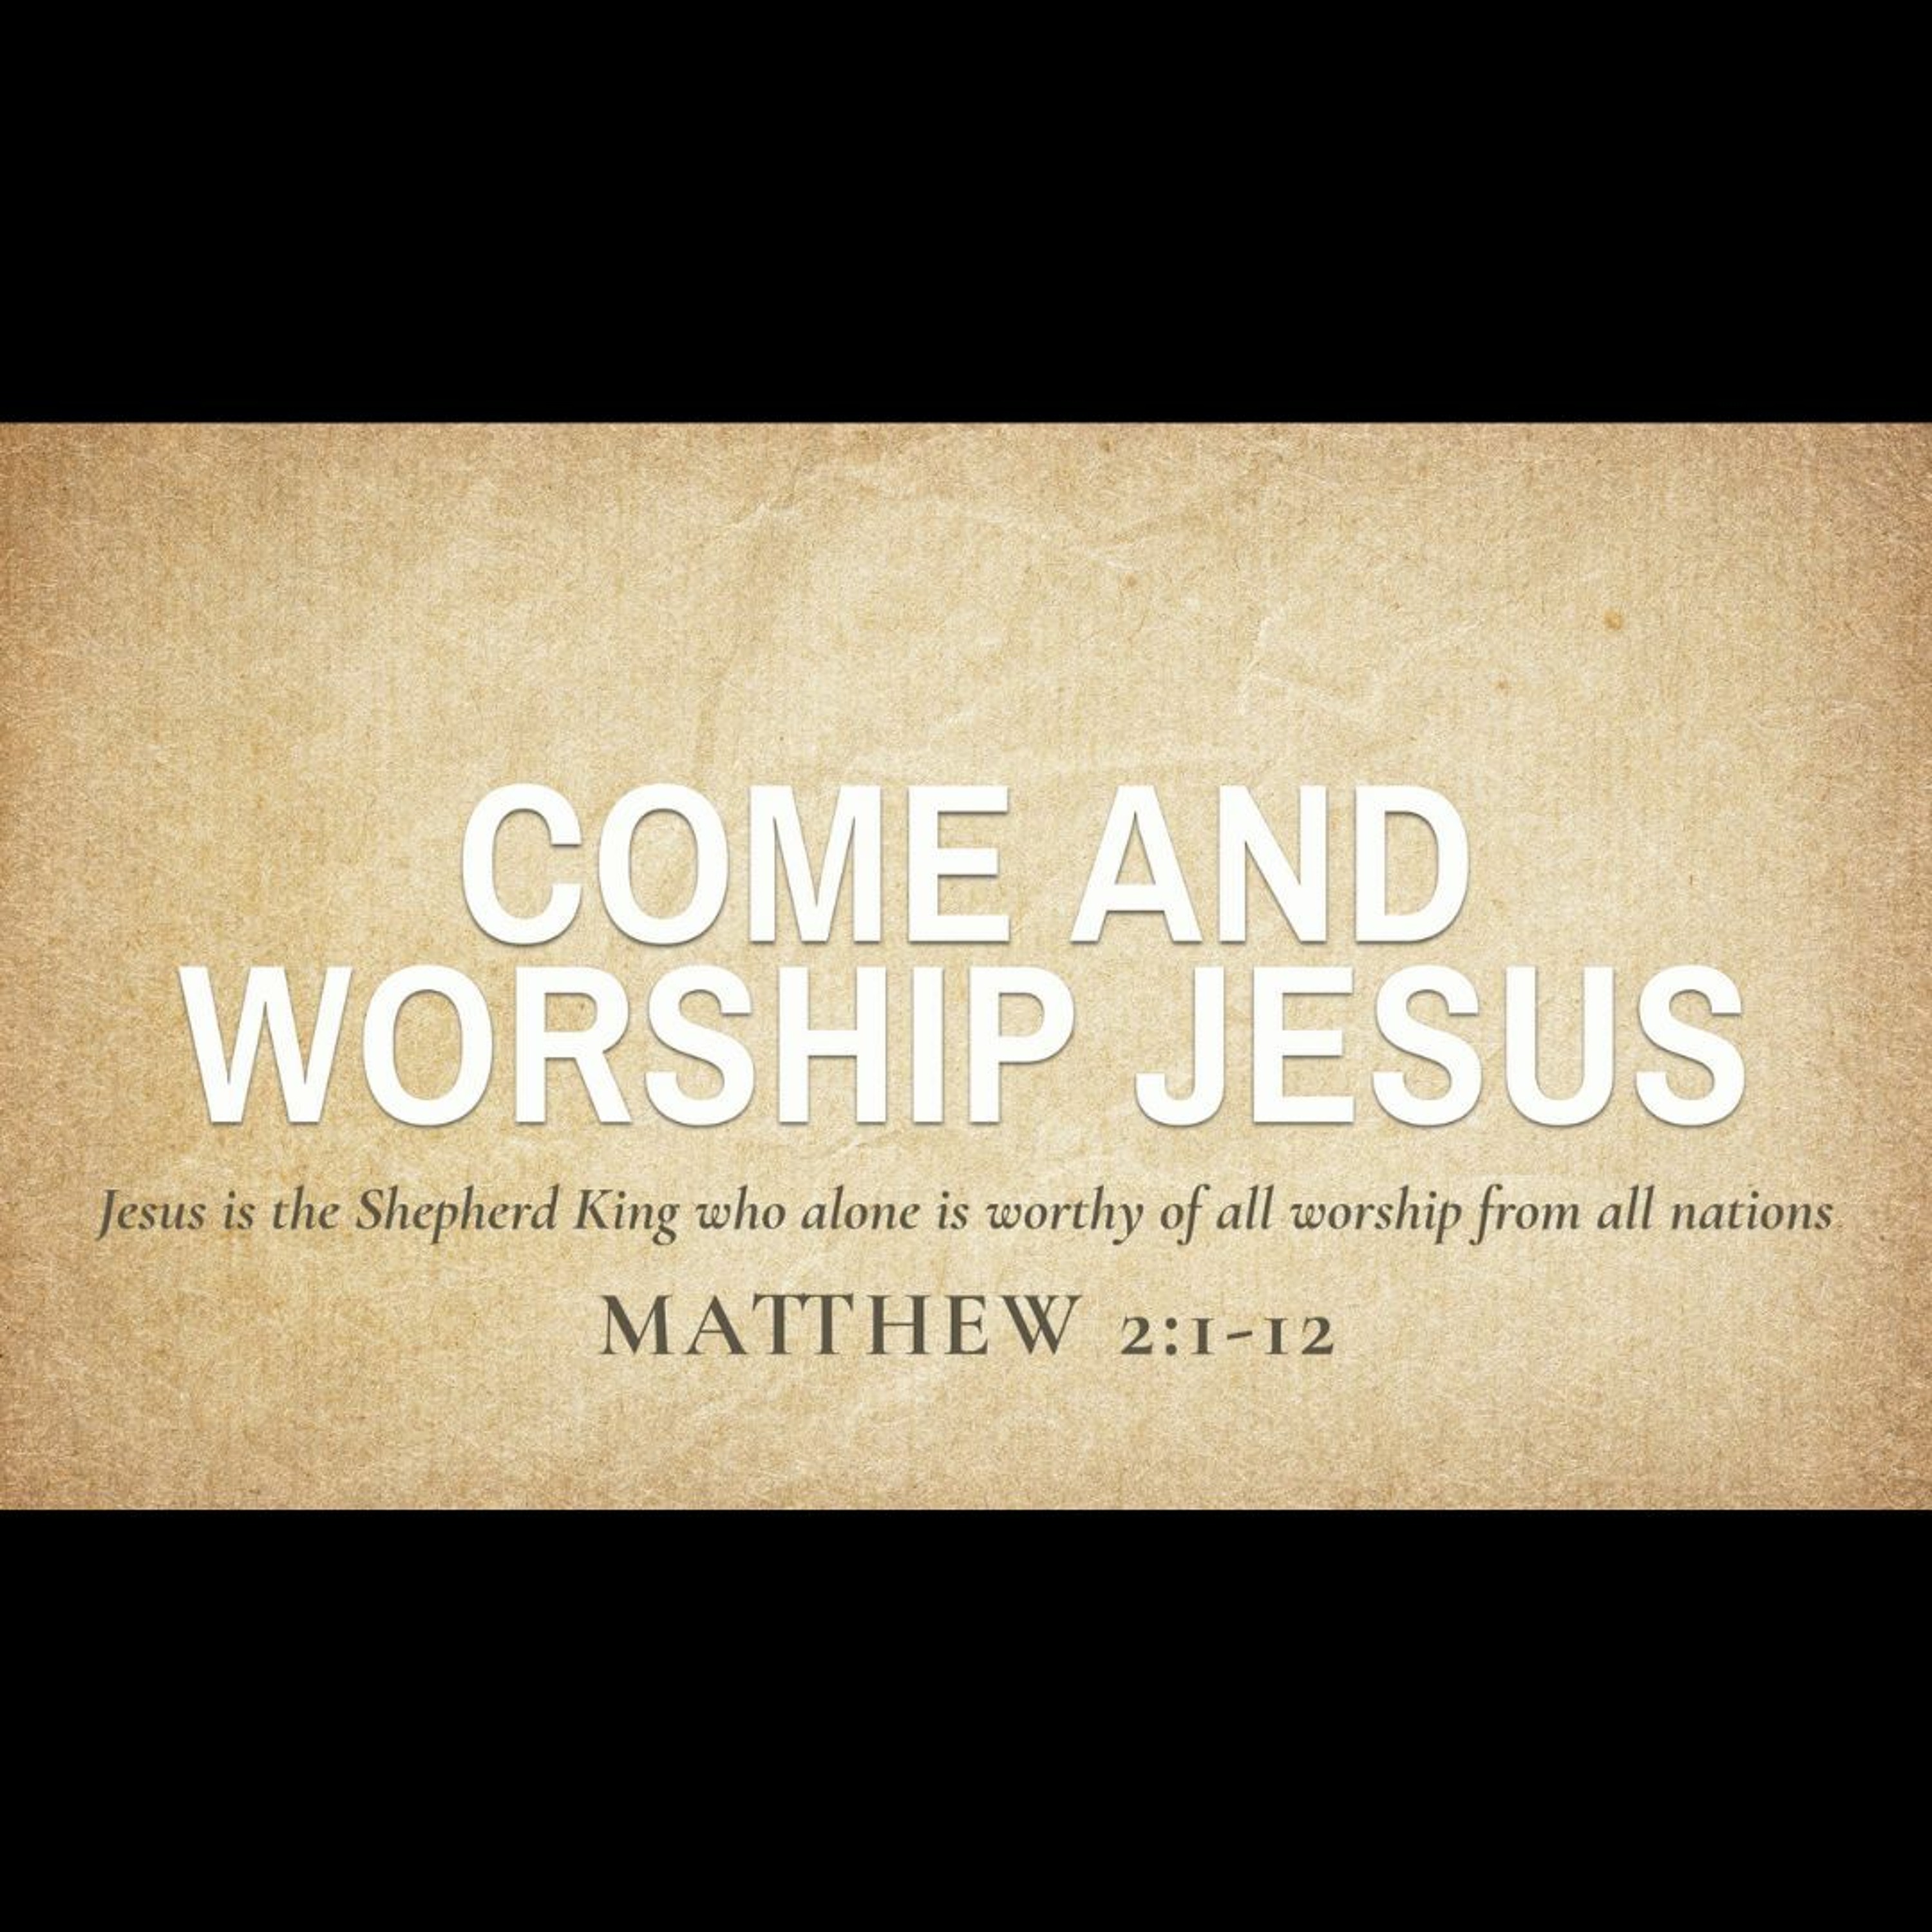 Come and Worship Jesus (Matthew 2:1-12)